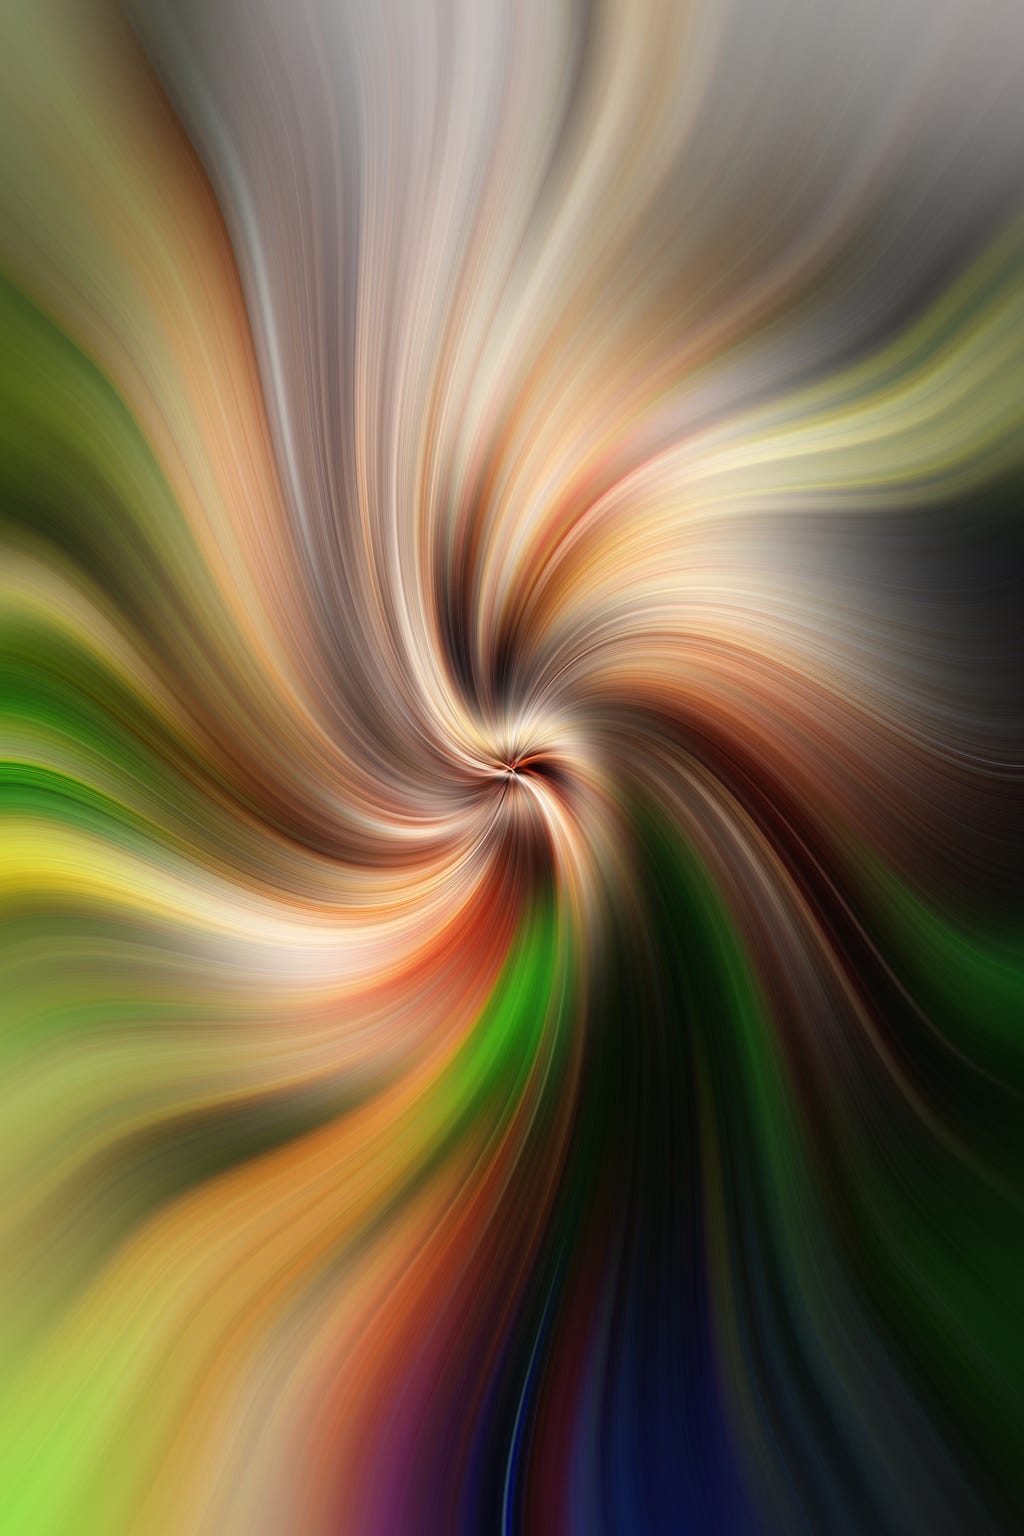 An abstract swirl